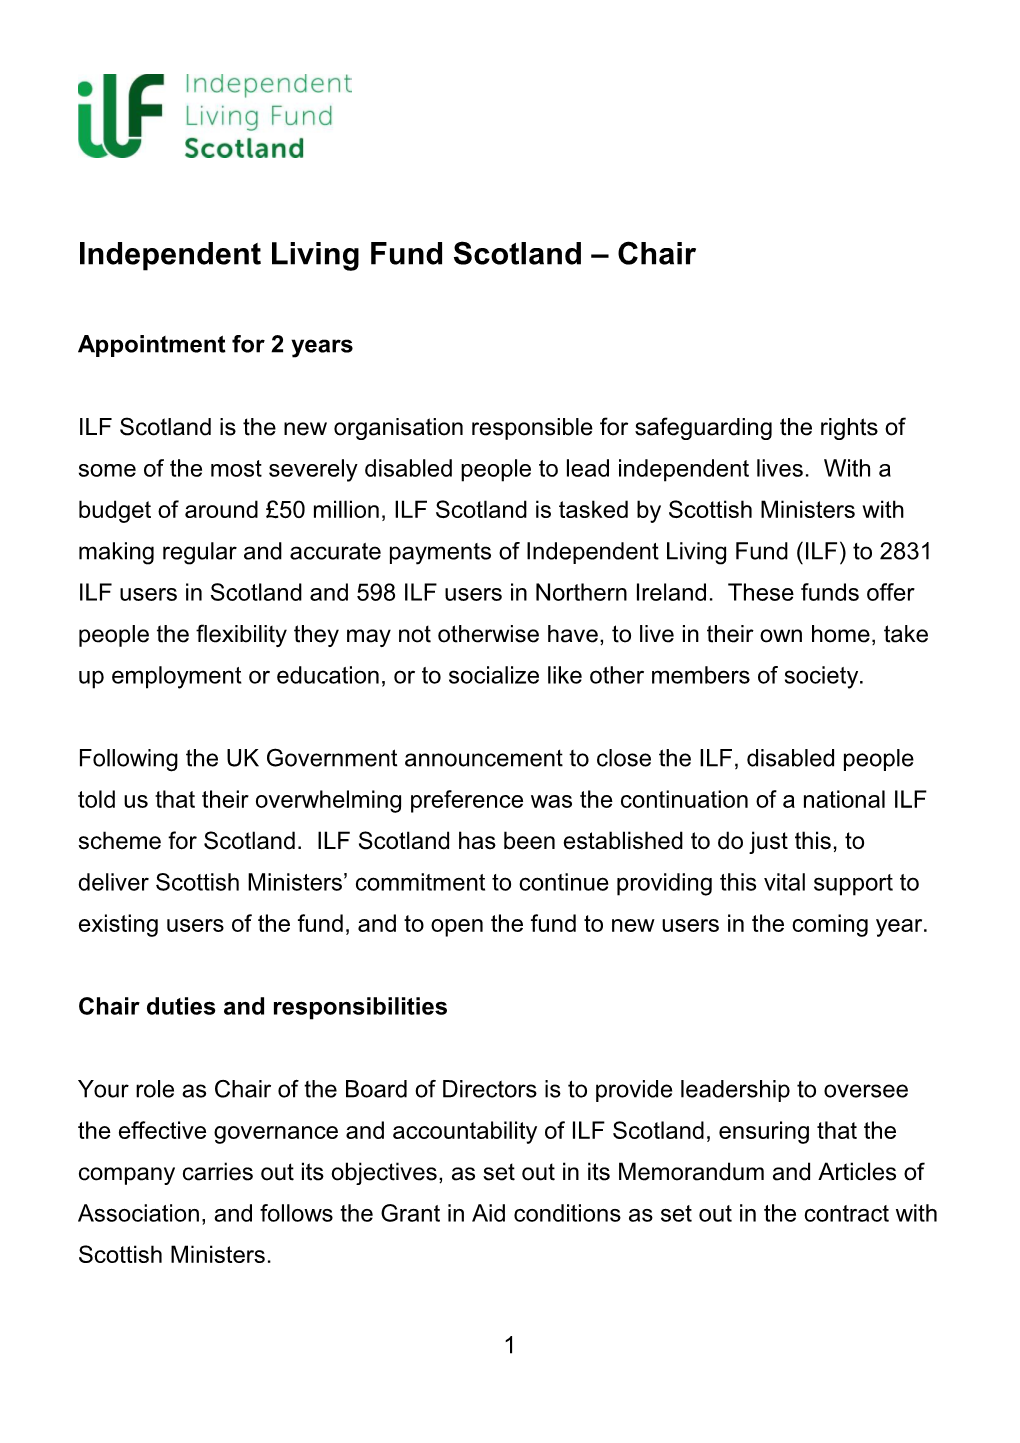 Independent Living Fund Scotland Chair